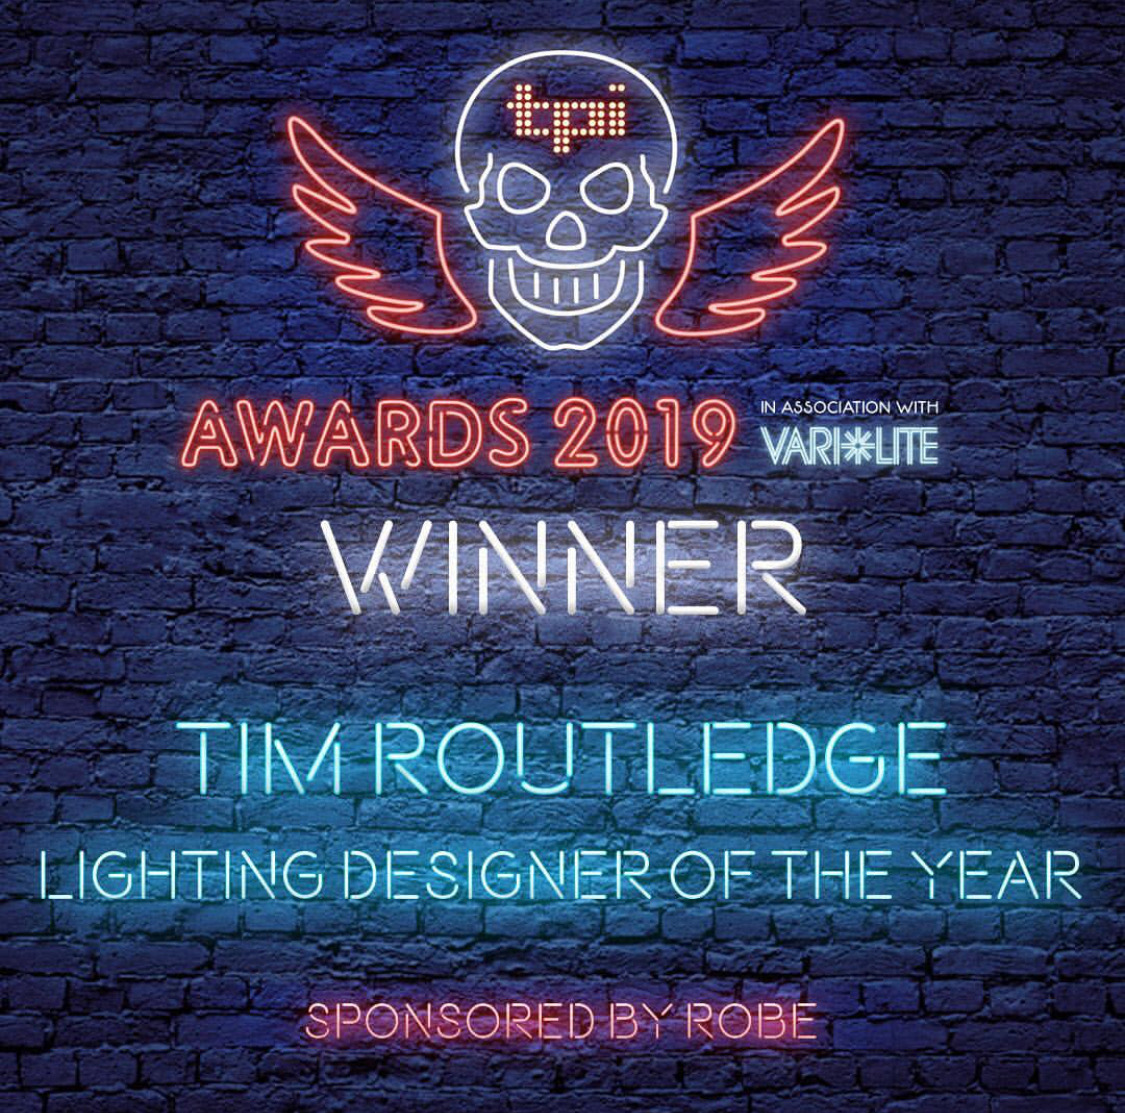 2019 Lighting Designer of the Year